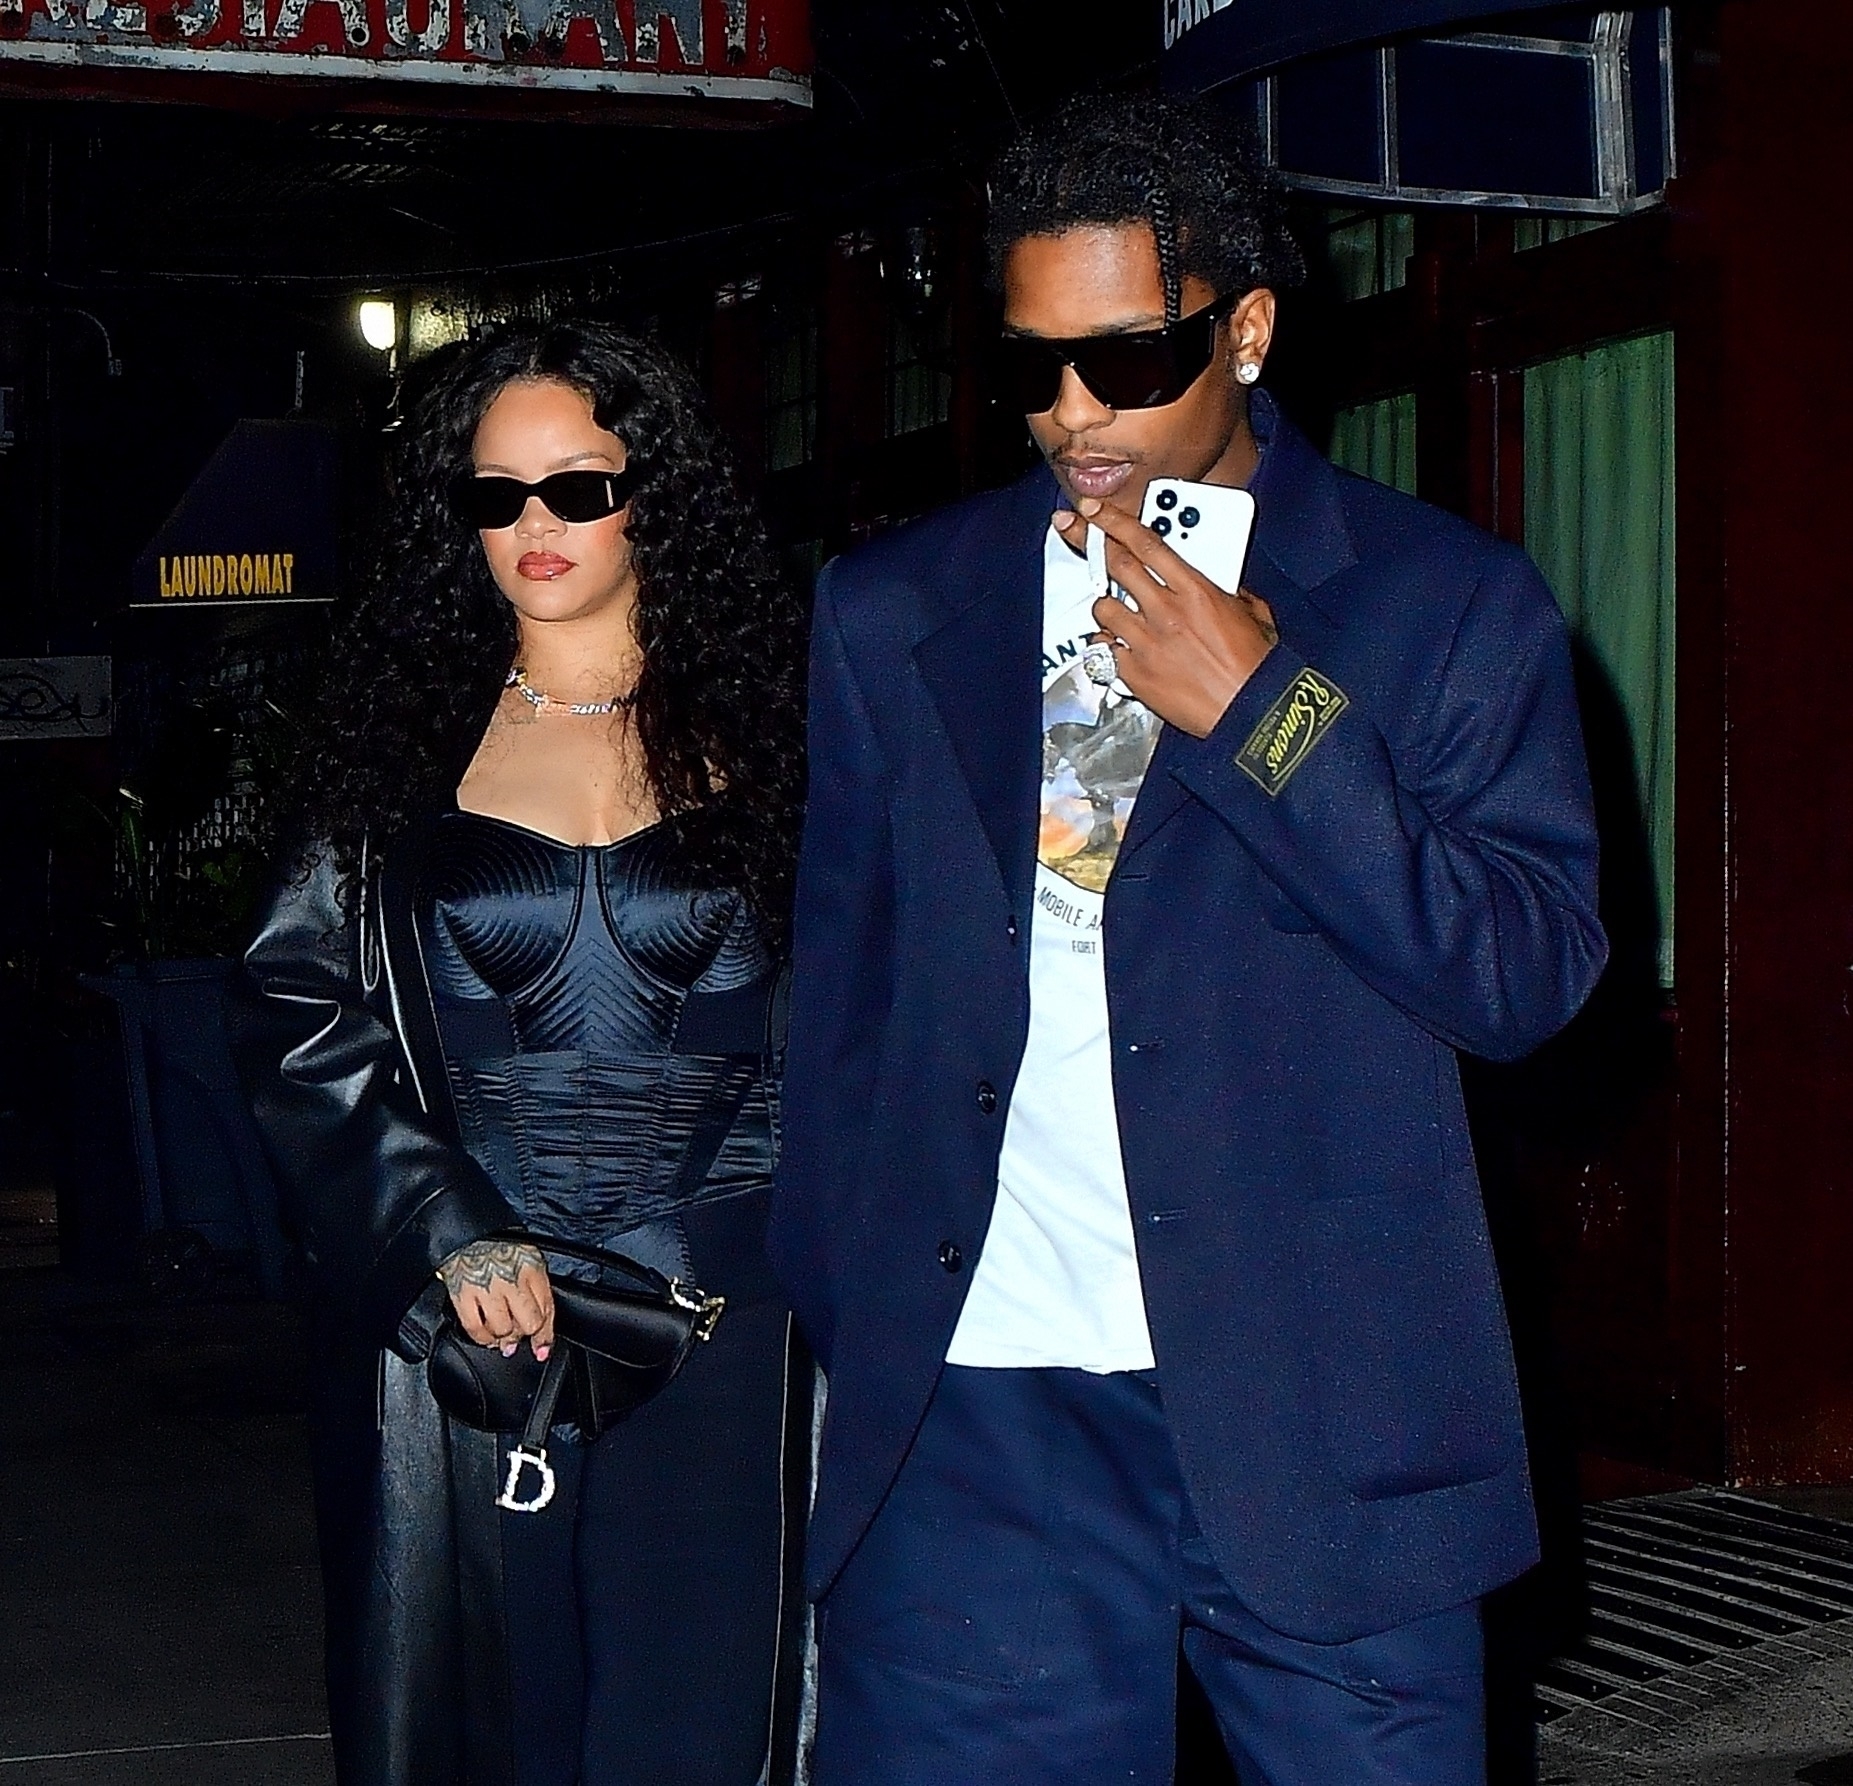  Rihanna junto a su novio A$AP Rocky. Foto © 2022 Backgrid/The Grosby Group

